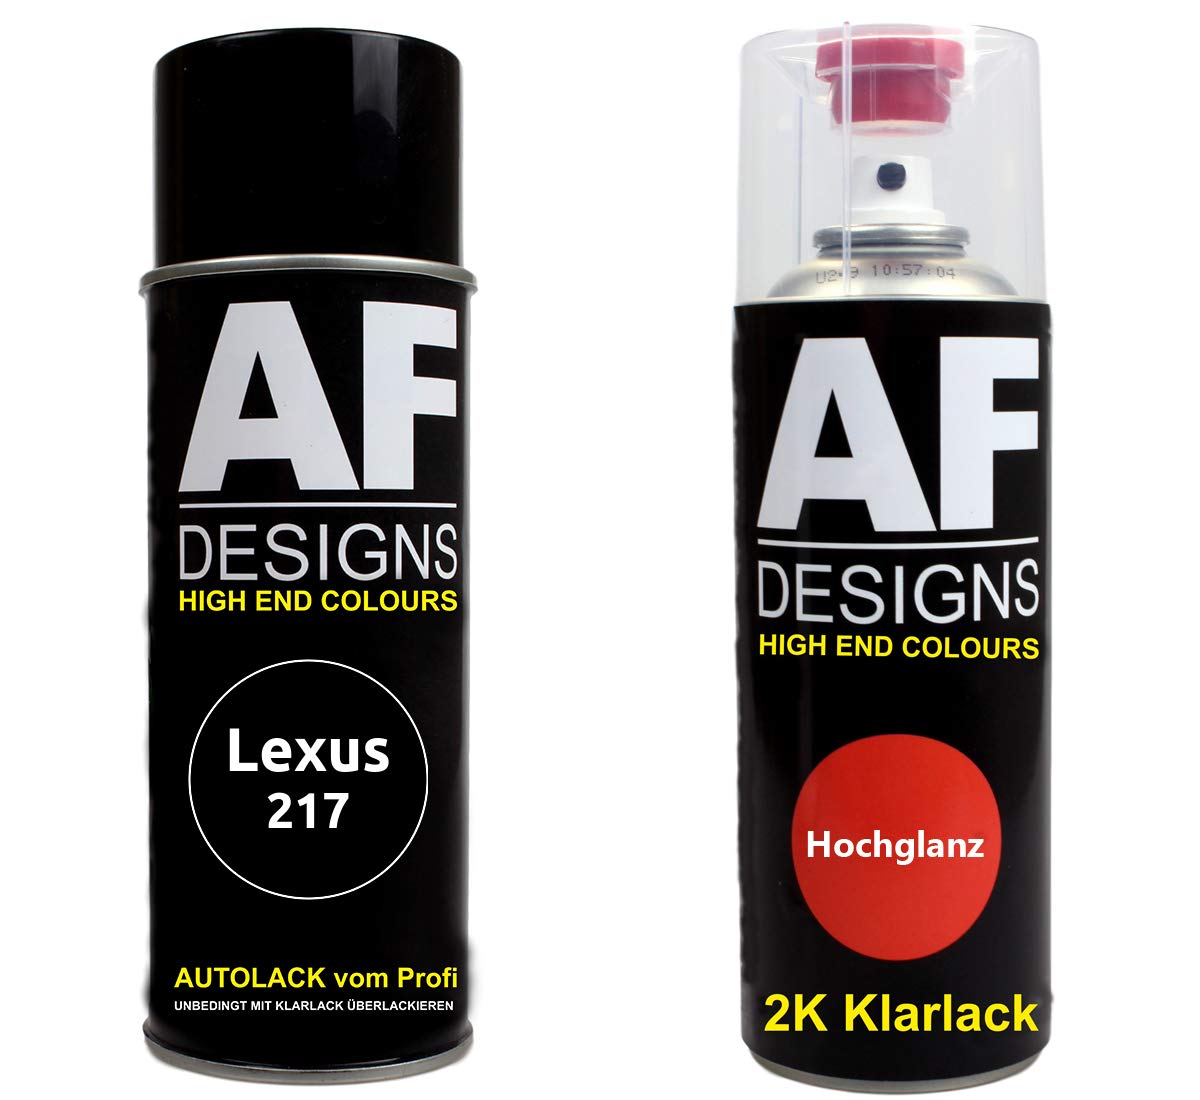 Alex Flittner Designs Autolack Spraydose Set für Lexus 217 Starlight Black Metallic 2K Klarlack Basislack Sprühdose Spraydosen 2x400ml von Alex Flittner Designs